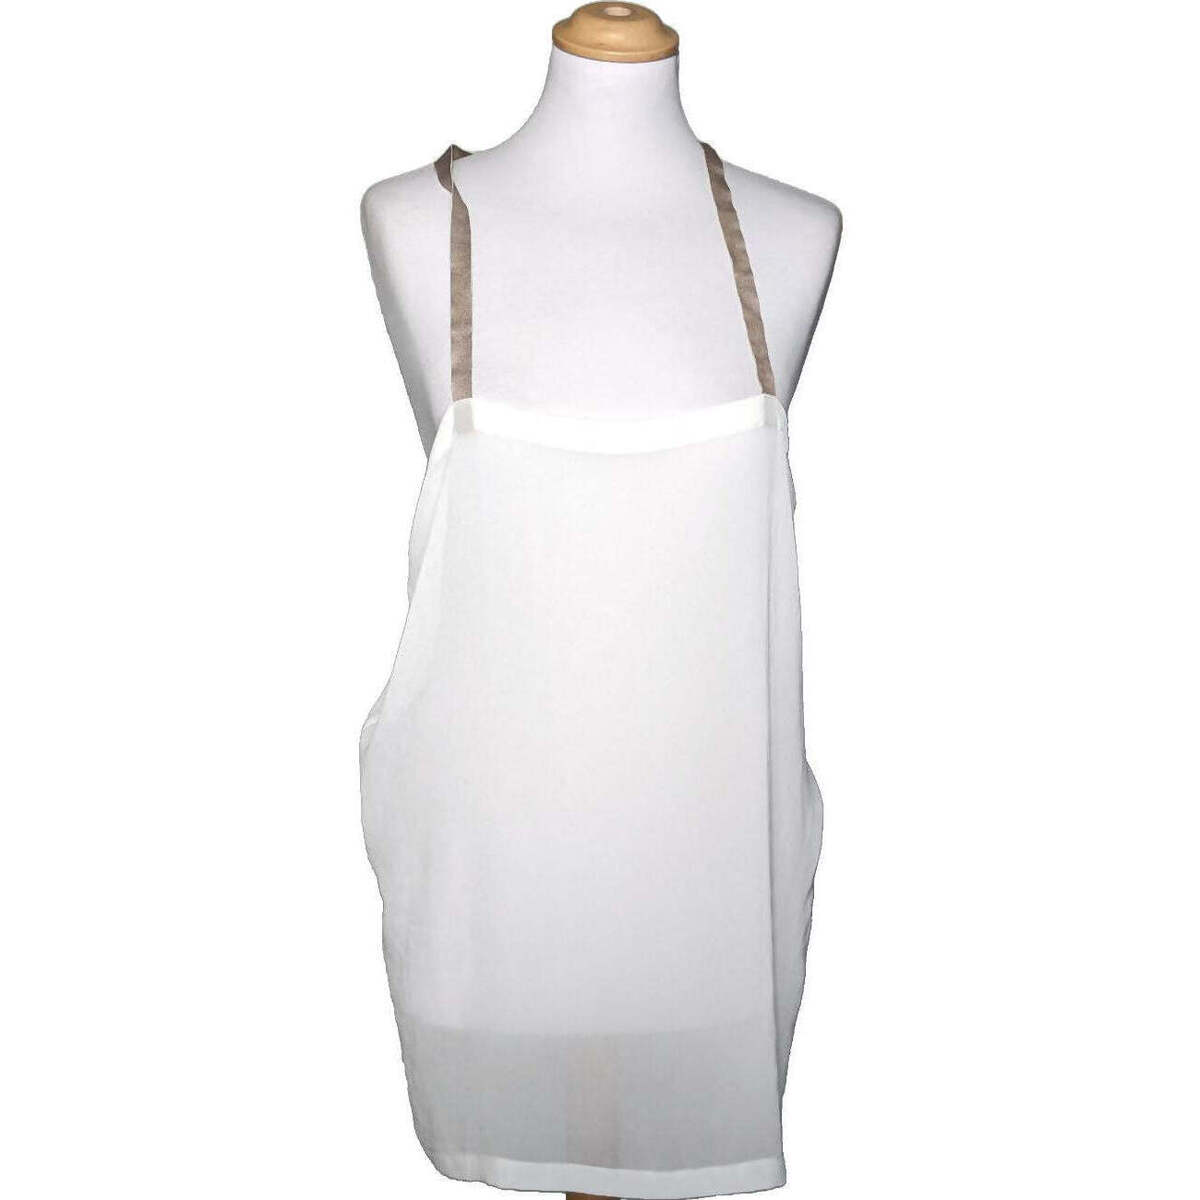 Vêtements Femme BOSS short sleeved mélange T-shirt débardeur  36 - T1 - S Blanc Blanc